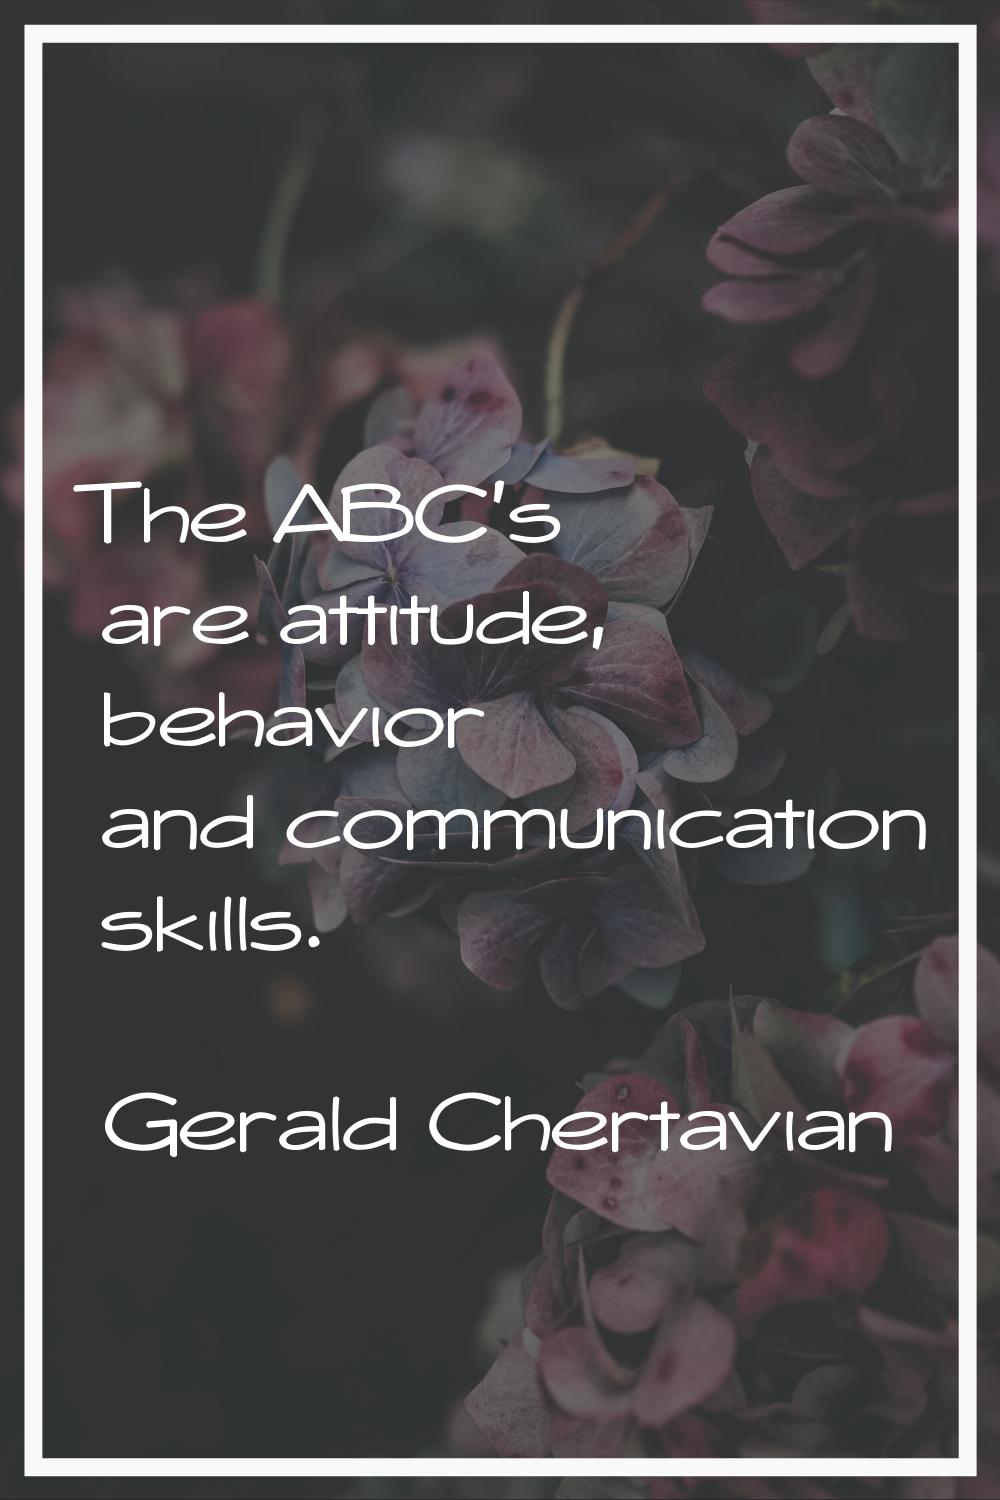 The ABC's are attitude, behavior and communication skills.